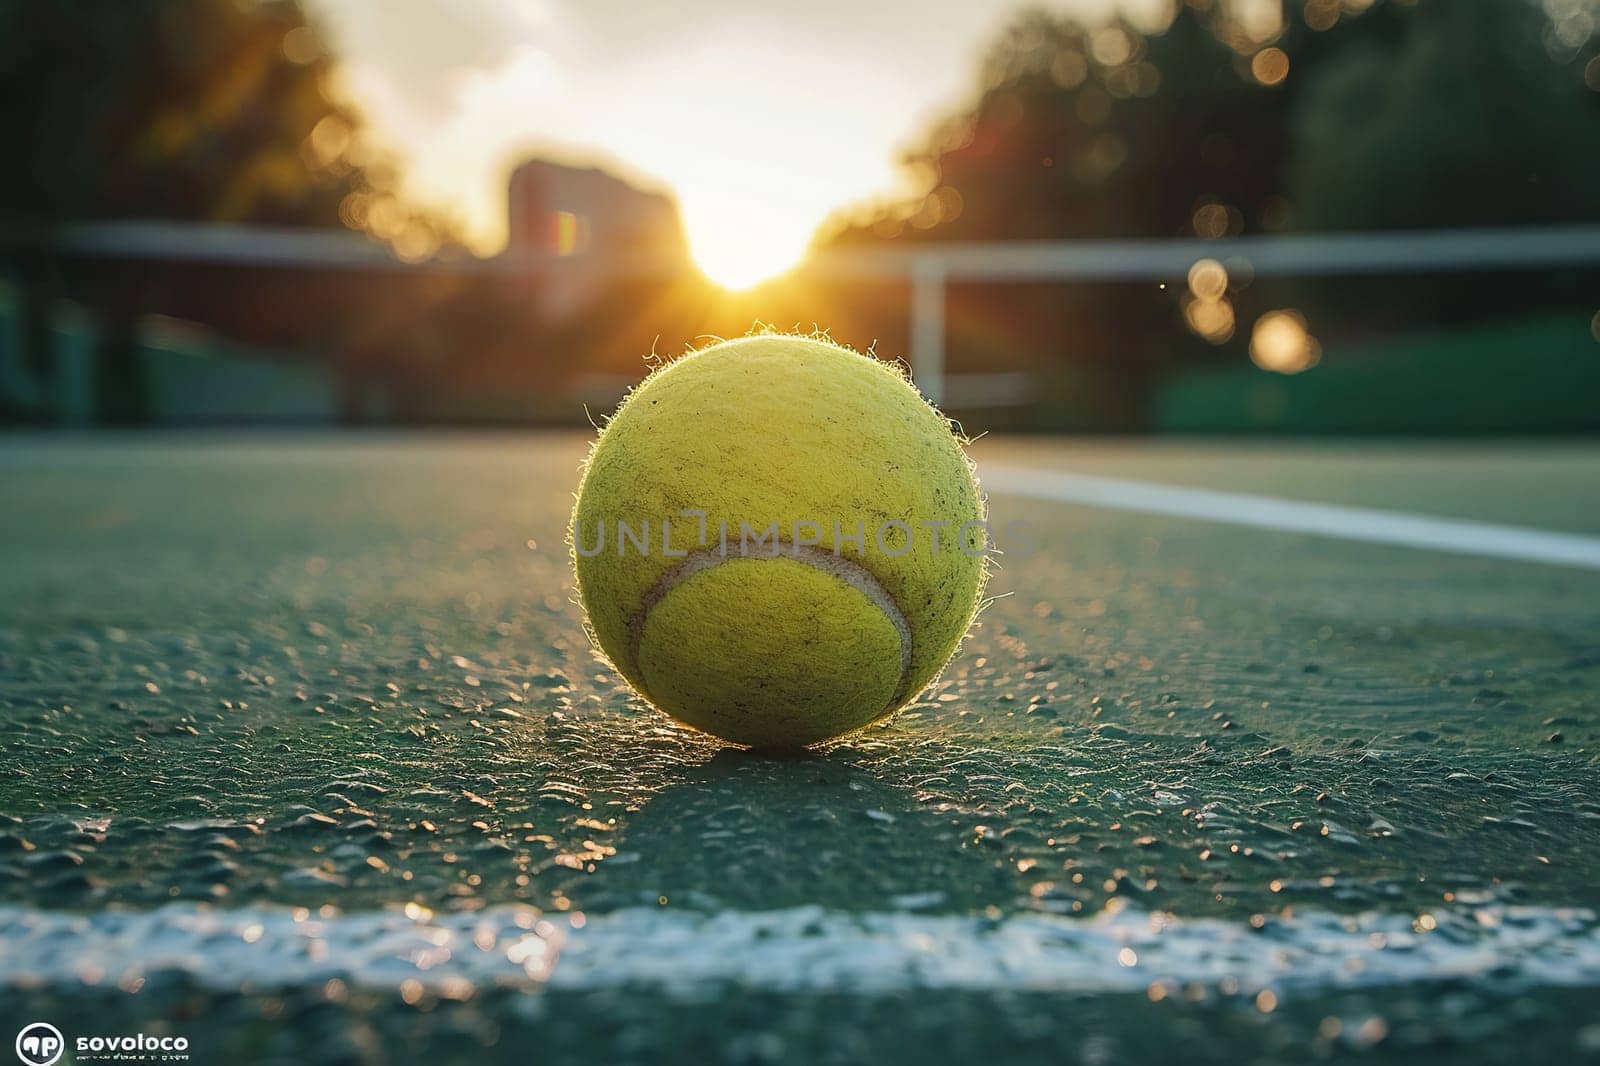 Close-up of a tennis ball on a tennis court at sunset.